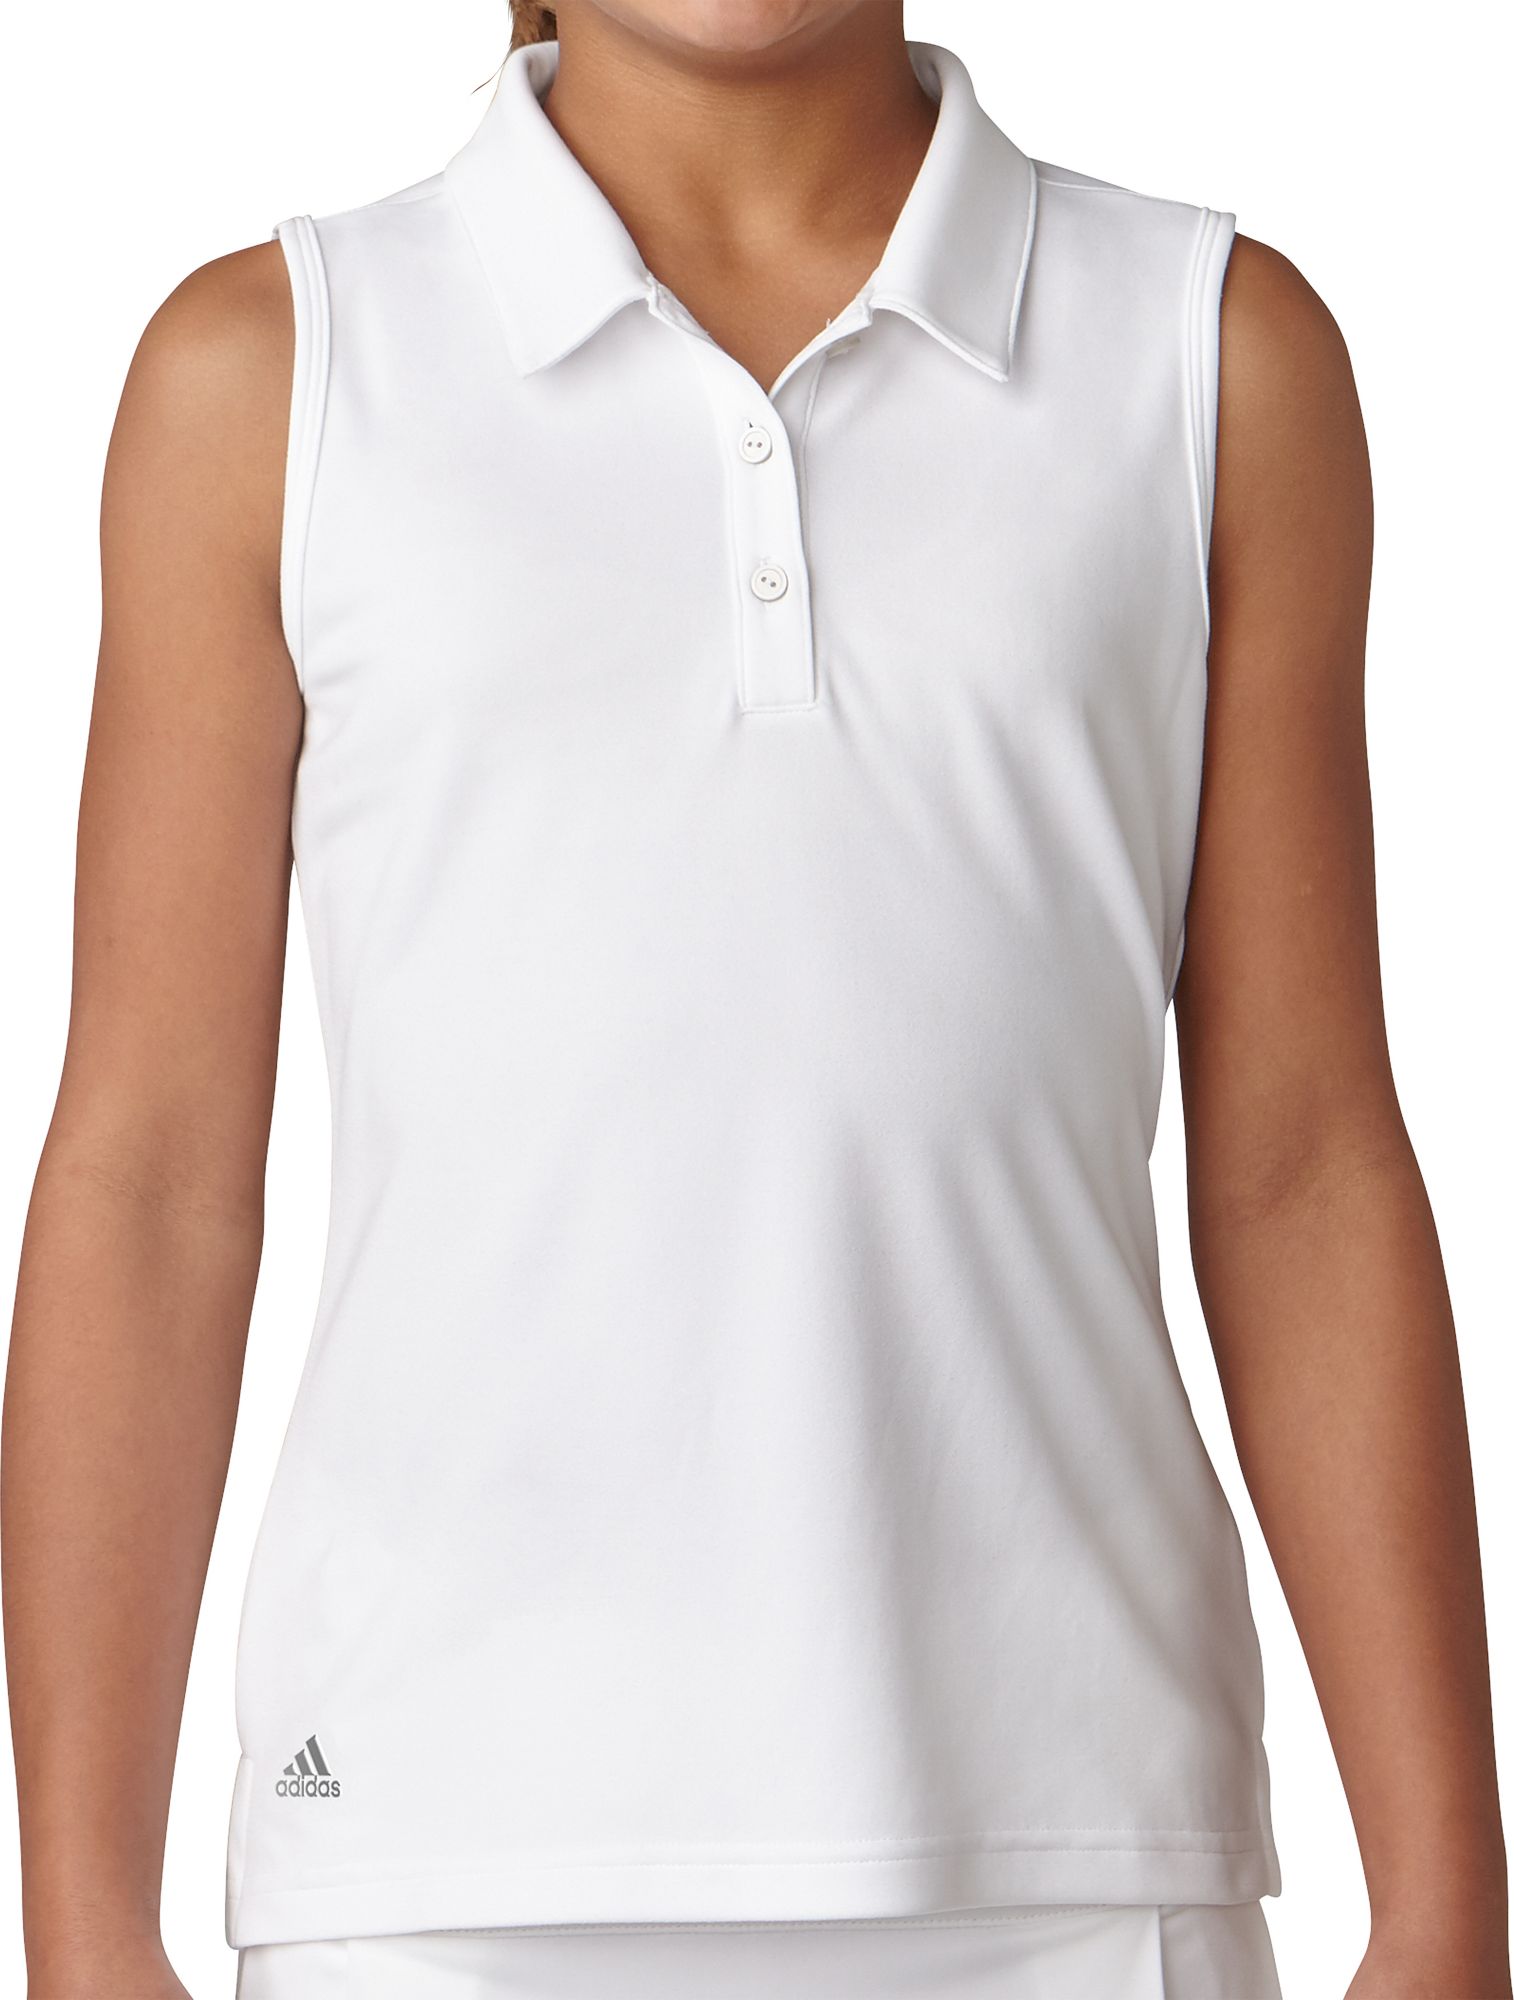 sleeveless golf polo shirts